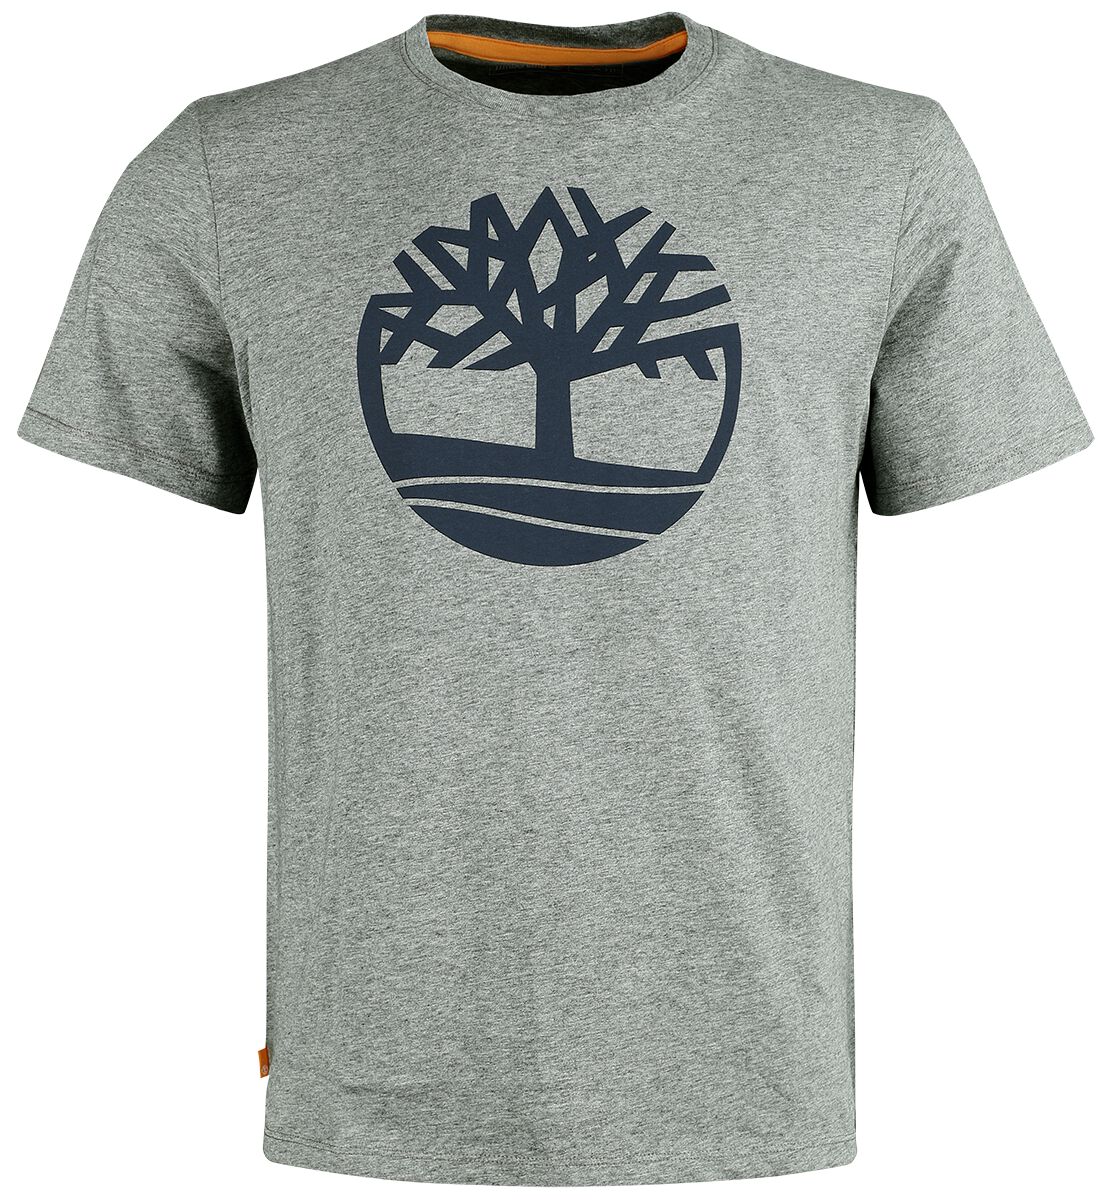 Timberland Kennebec River Tree Logo Short Sleeve Tee T-Shirt grau meliert in S